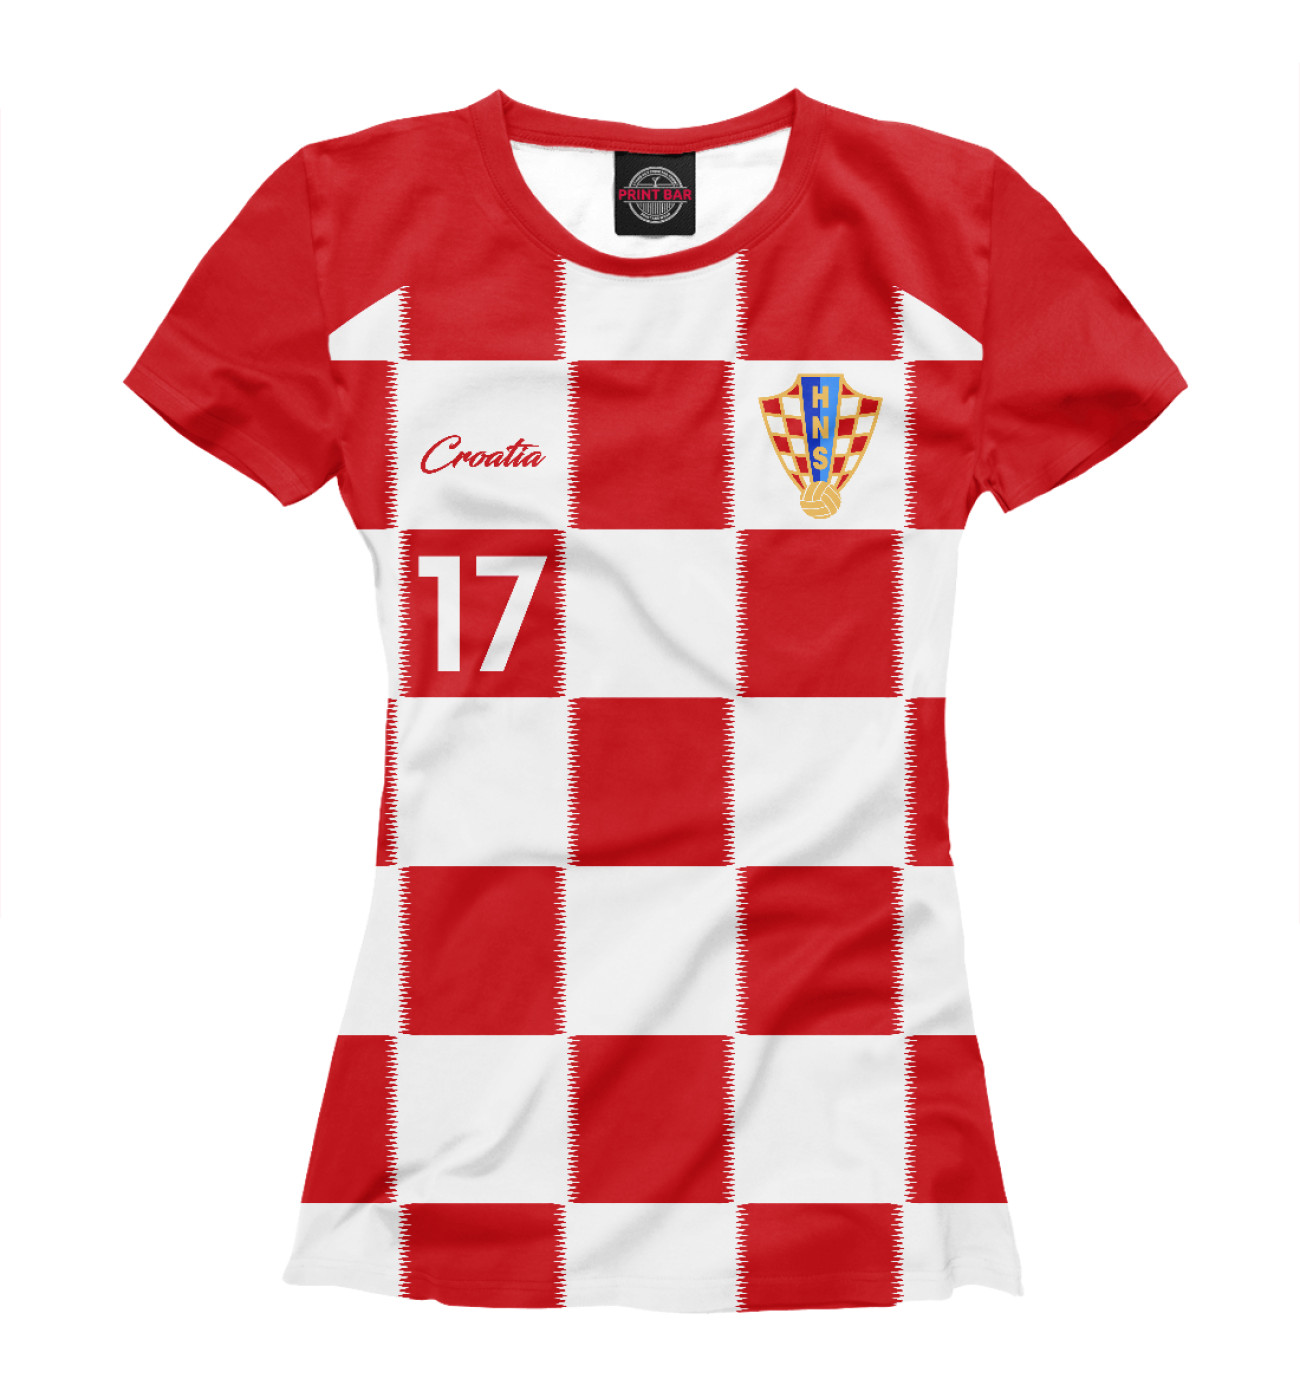 Женская Футболка Марио Манджукич - Сборная Хорватии, артикул: FLT-790781-fut-1